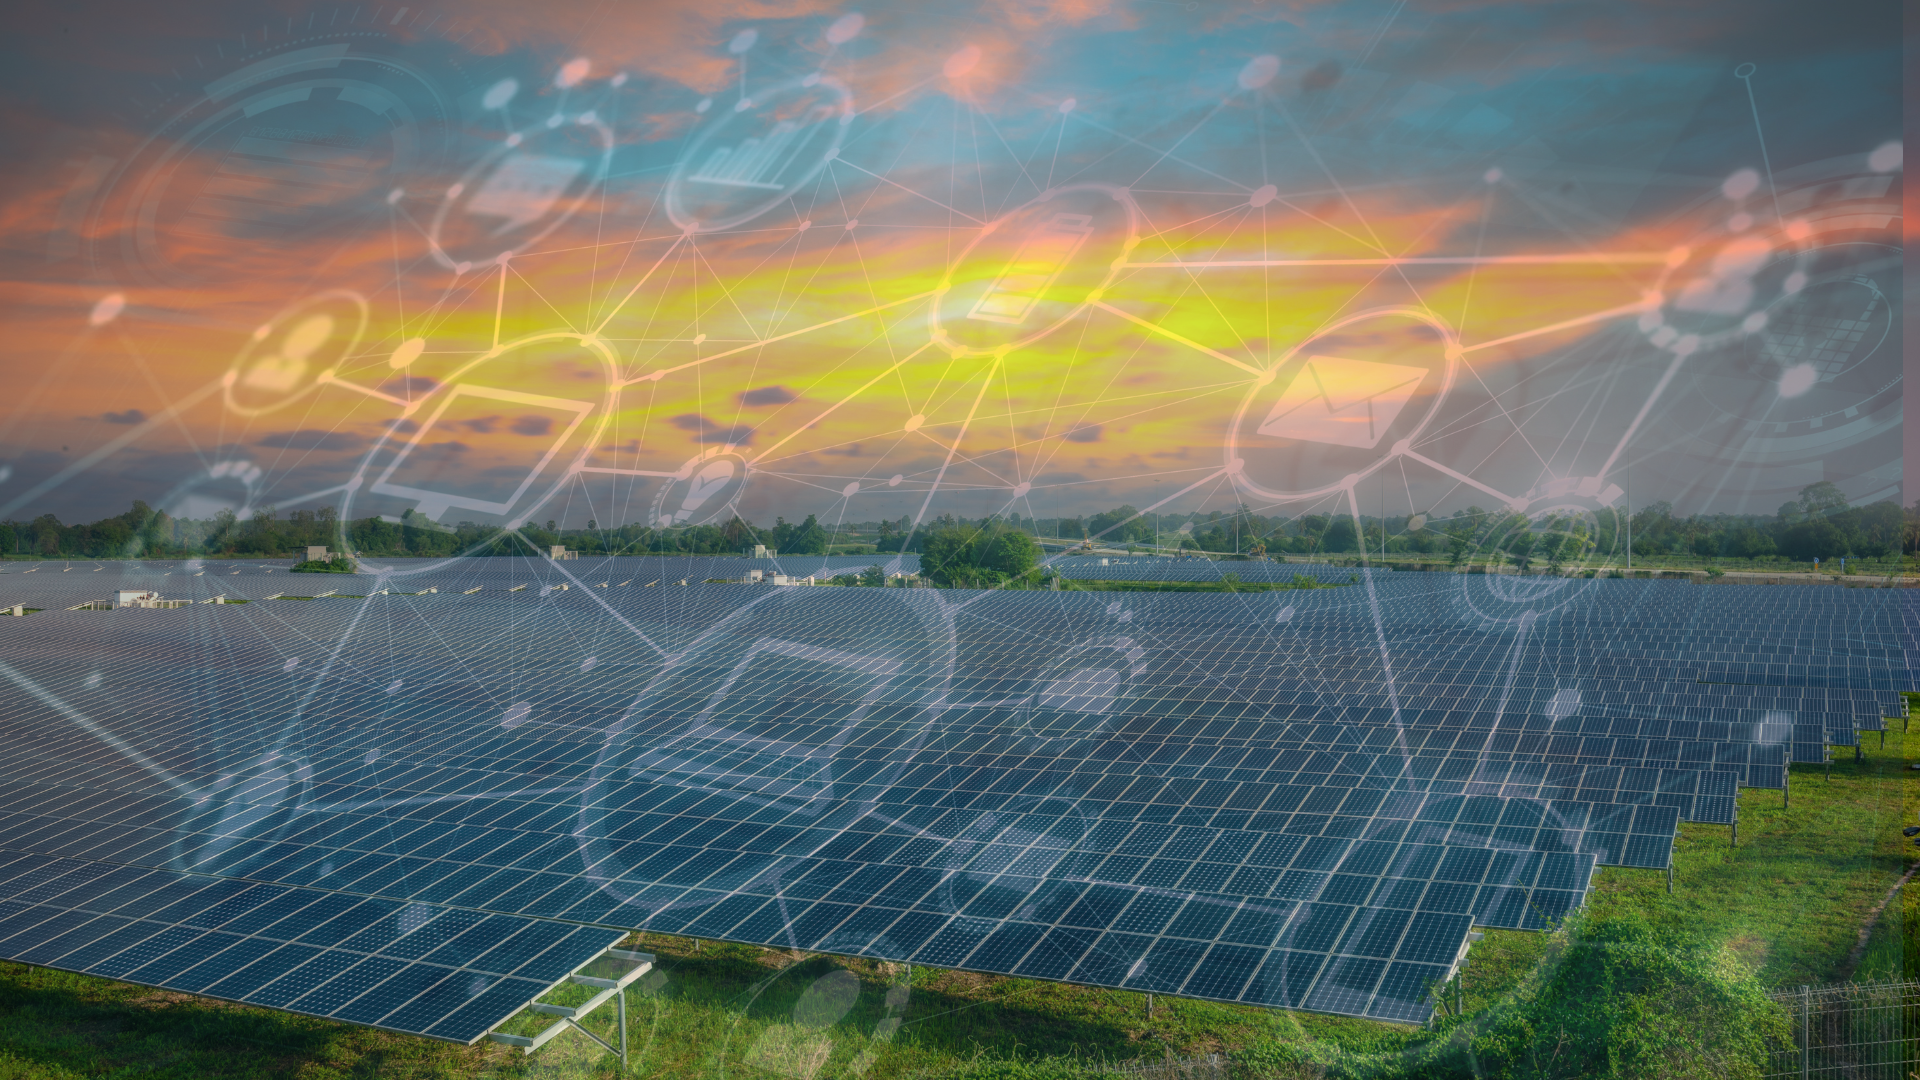 Decoding Digital Twin for solar plants